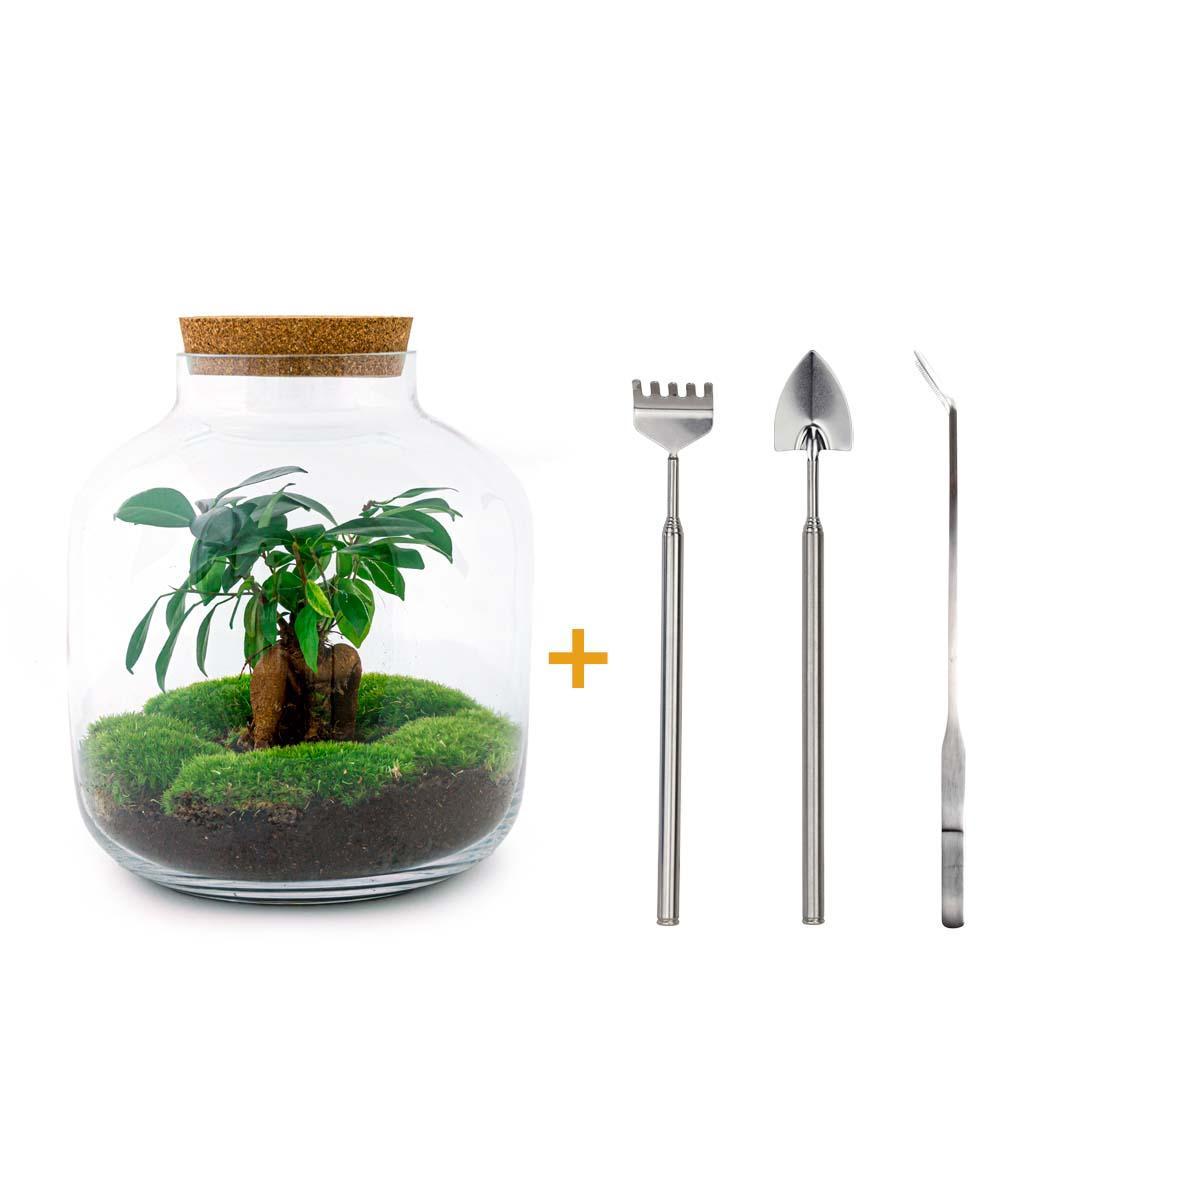 DIY terrarium - Billie - ↑ 29 cm + Rake + Shovel + Tweezer